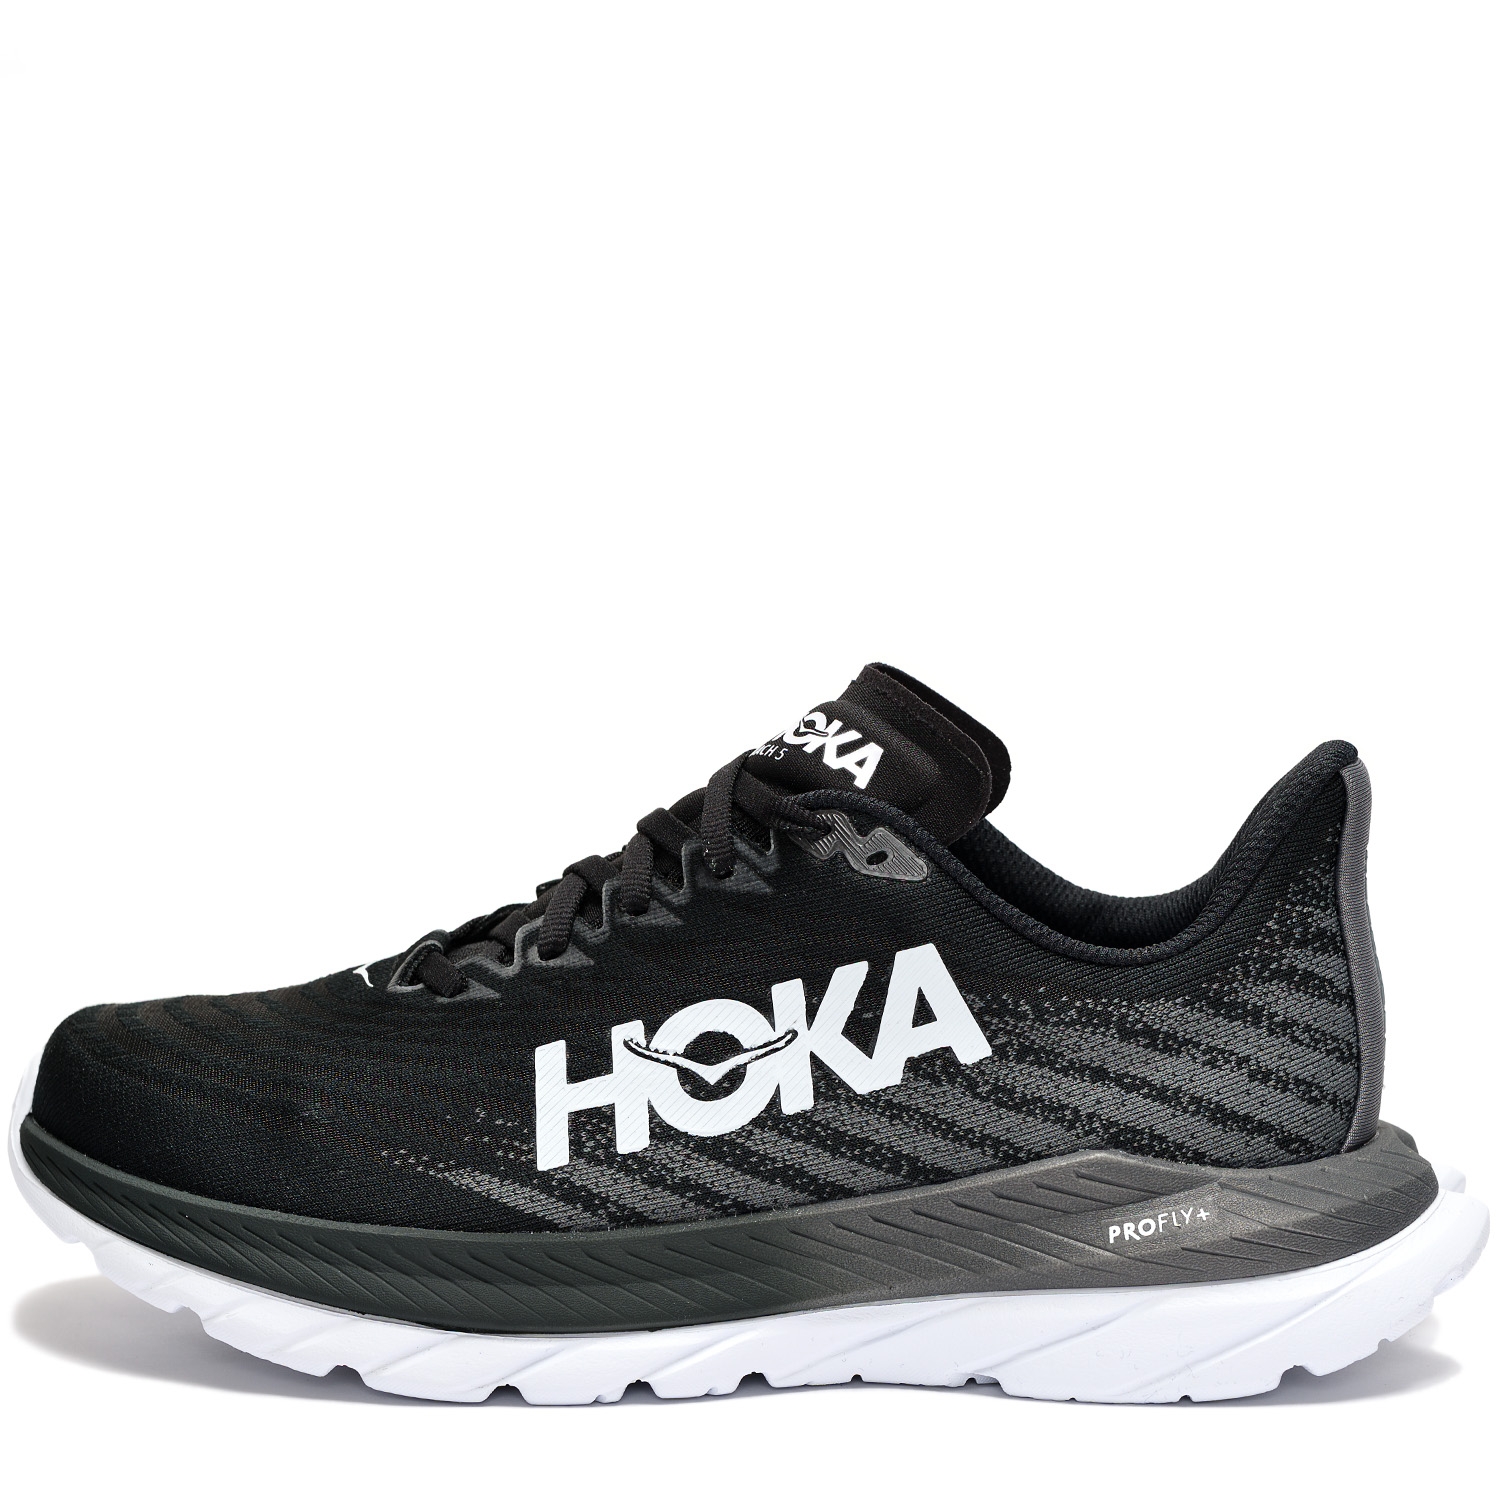 HOKA MACH 5 W black/white